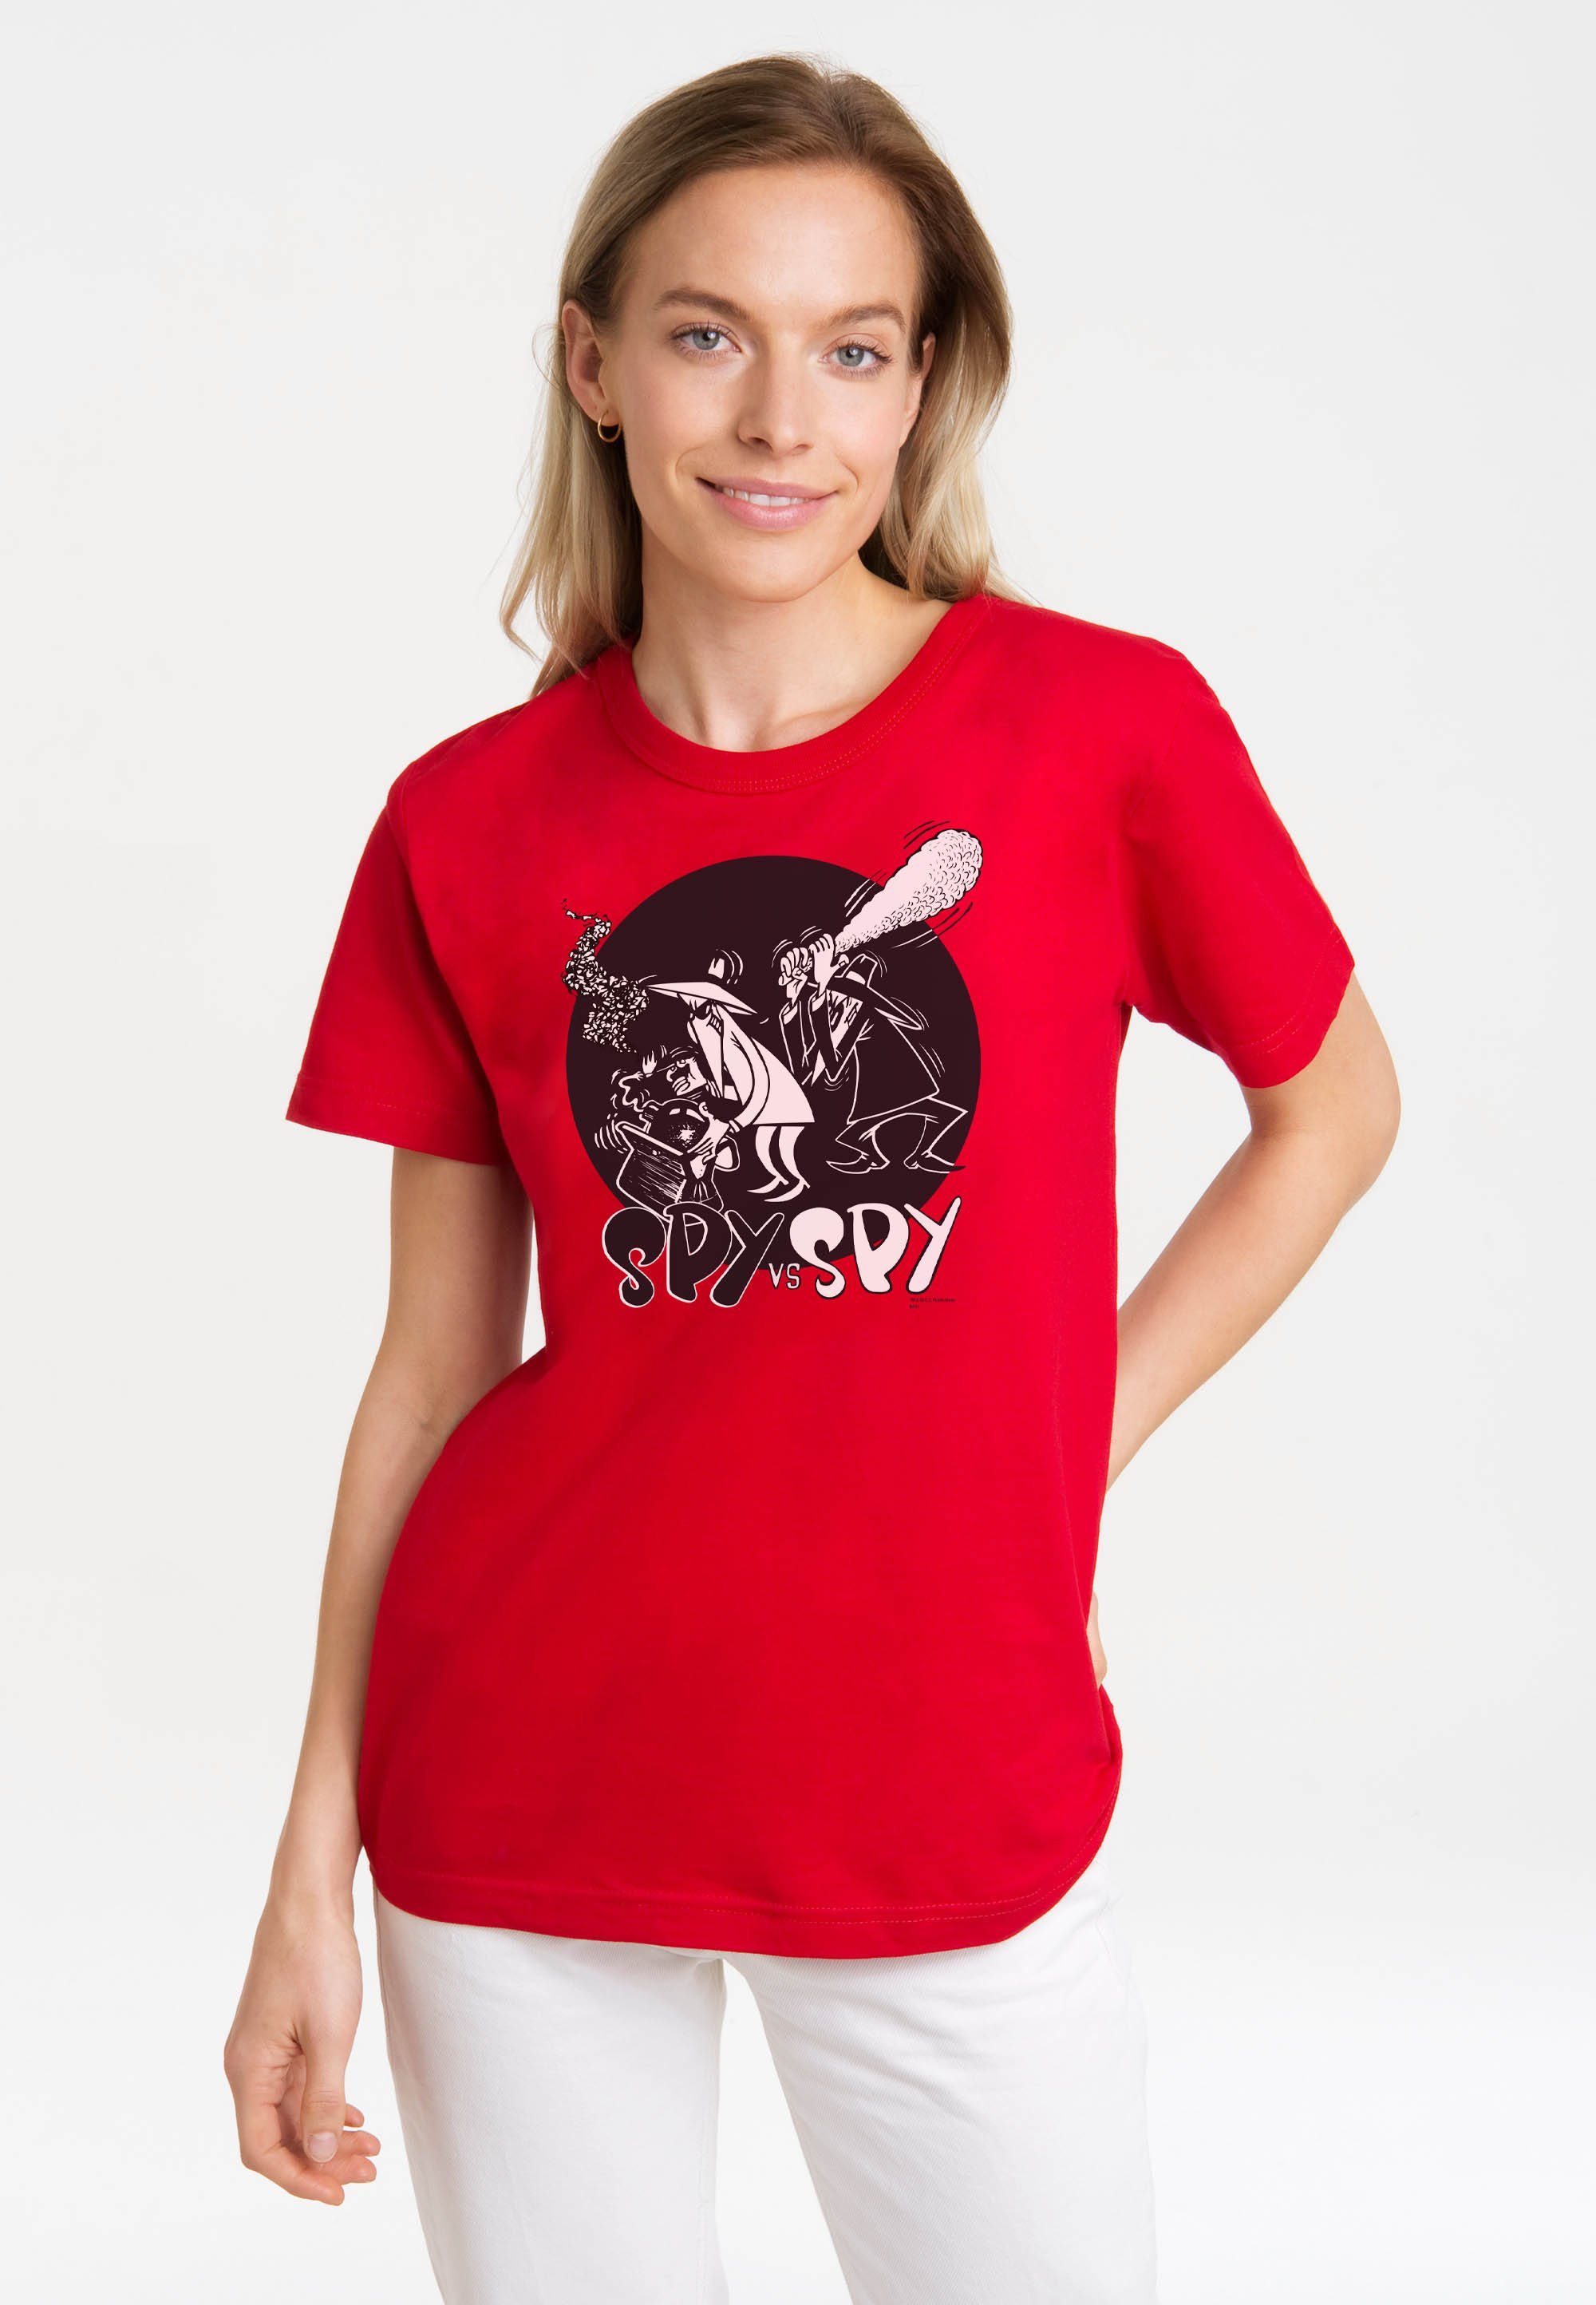 LOGOSHIRT - T-Shirt coolem mit Spy Mad Print Spy vs